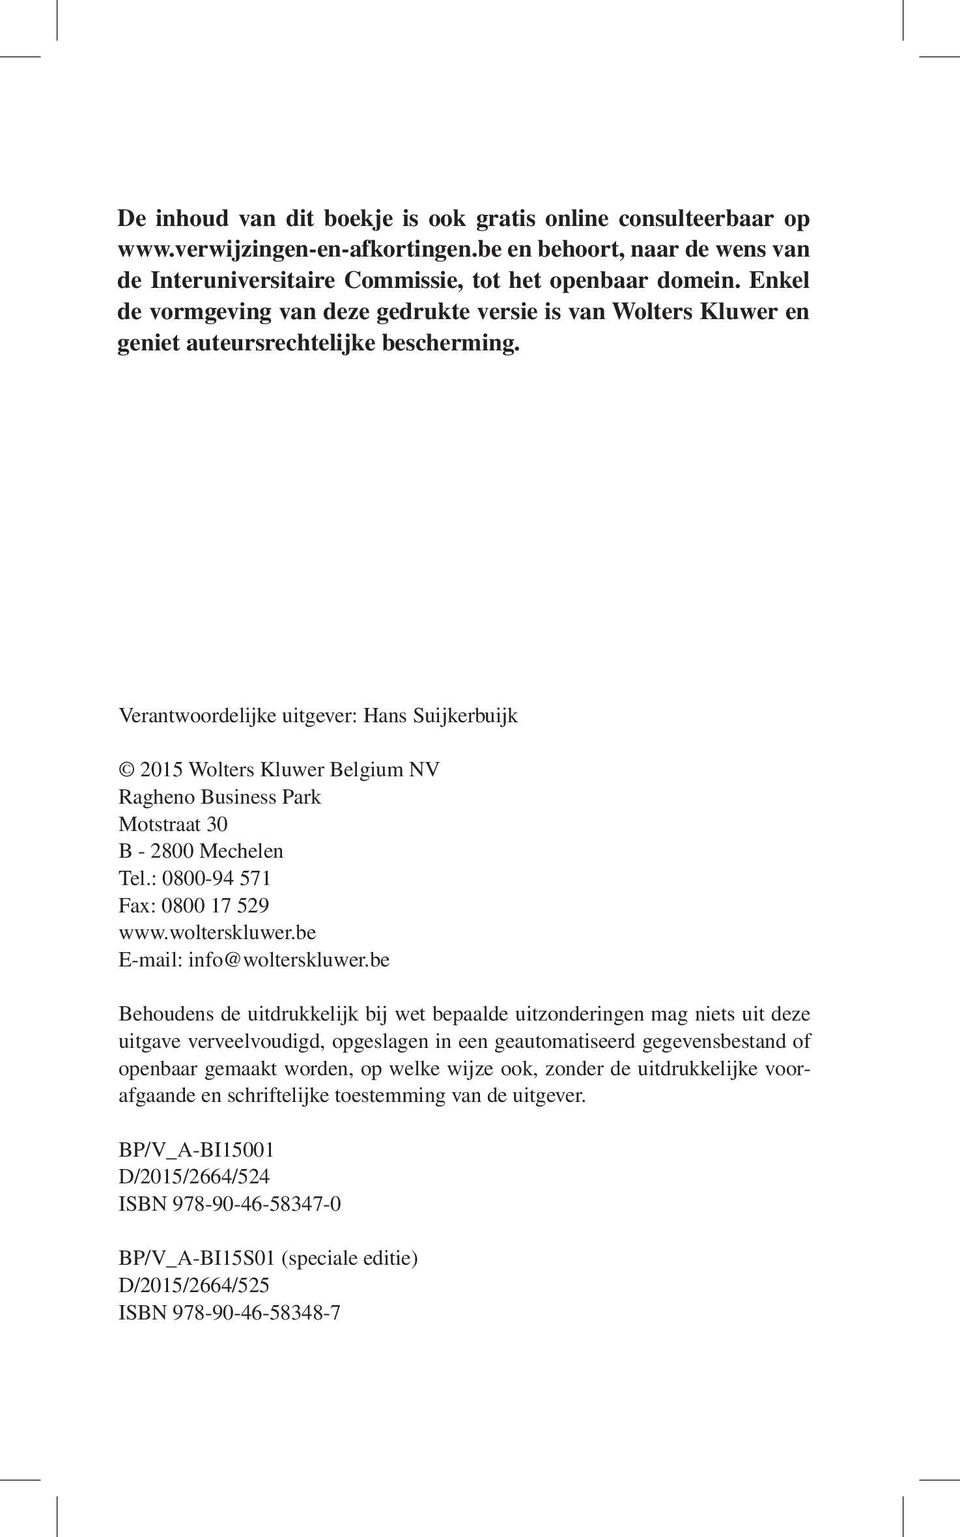 Verantwoordelijke uitgever: Hans Suijkerbuijk 2015 Wolters Kluwer Belgium NV Ragheno Business Park Motstraat 30 B - 2800 Mechelen Tel.: 0800-94 571 Fax: 0800 17 529 www.wolterskluwer.